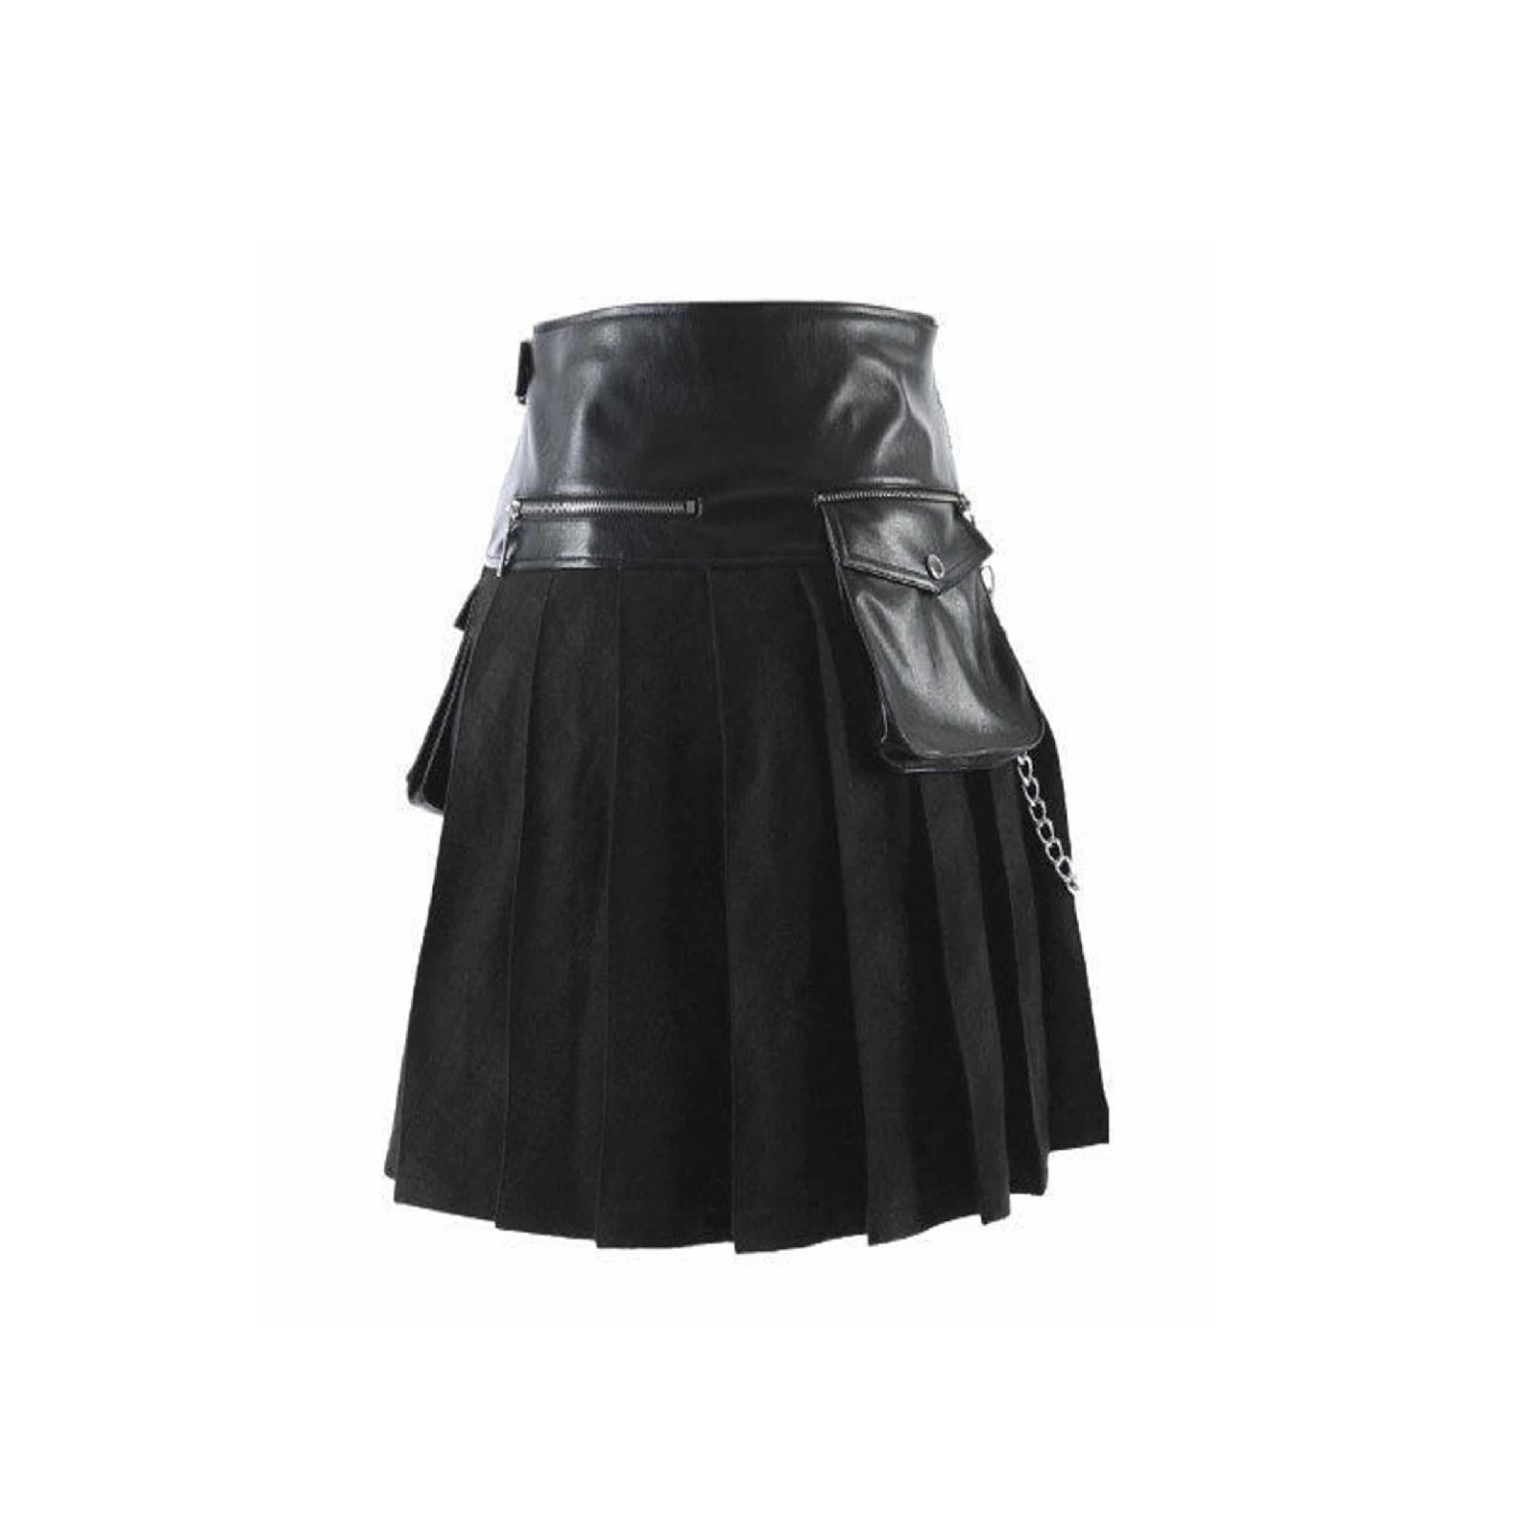 Scottish Utility Black Leather Kilt | Modern Kilt for sale Nov 2020 ...